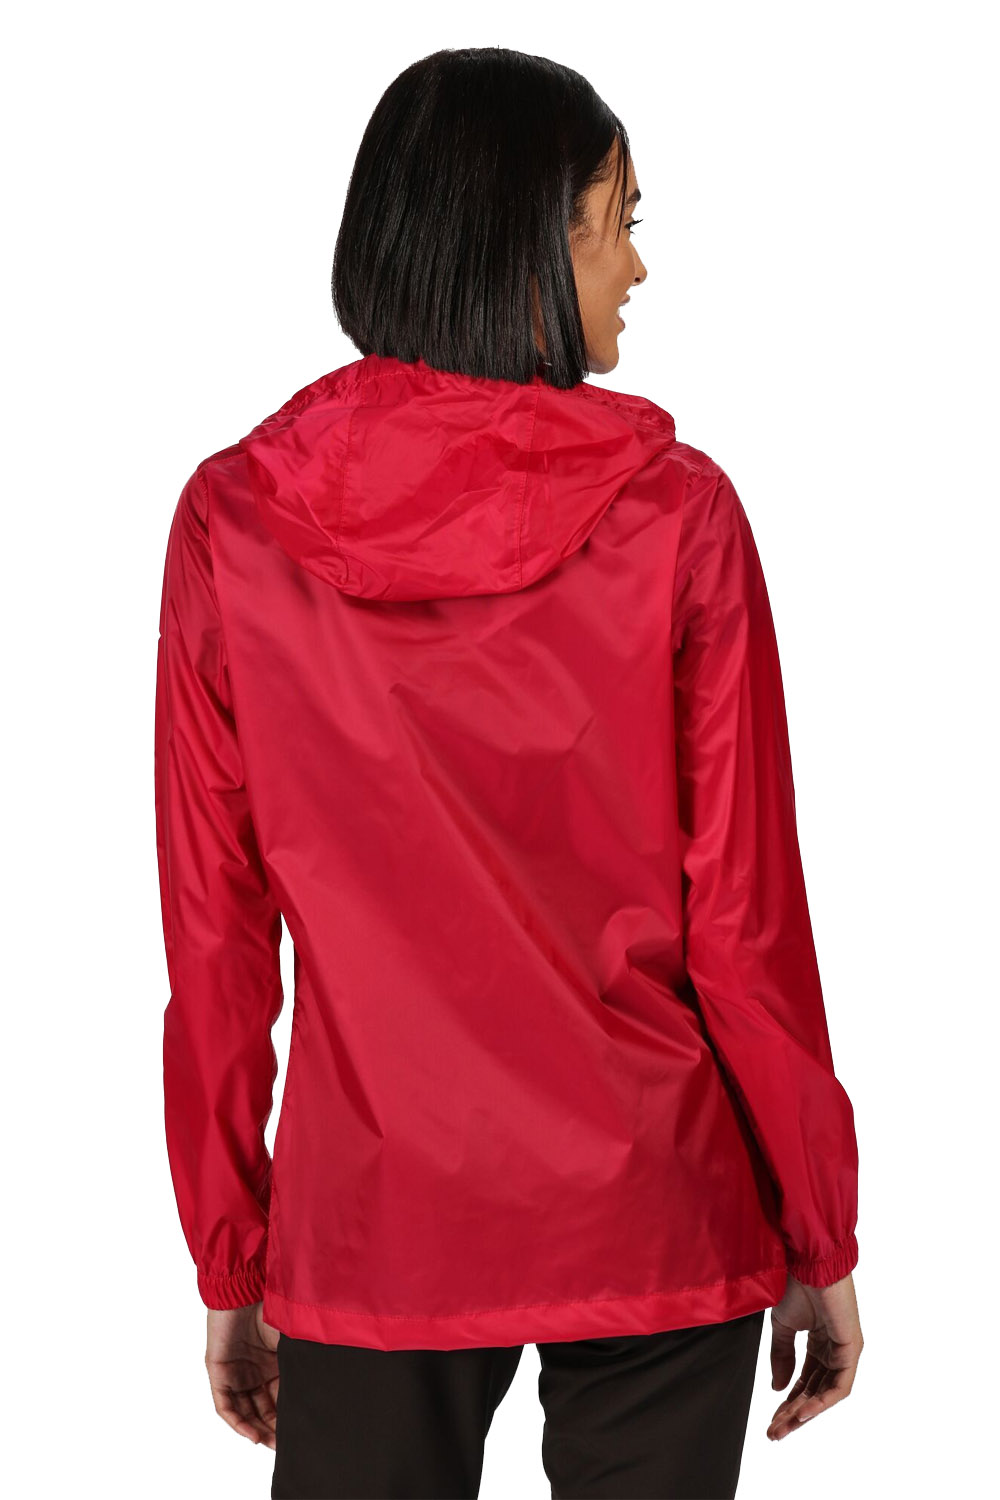 Regatta Womens Ladies Pack It Waterproof Coat Packaway Lightweight Jacket III | eBay